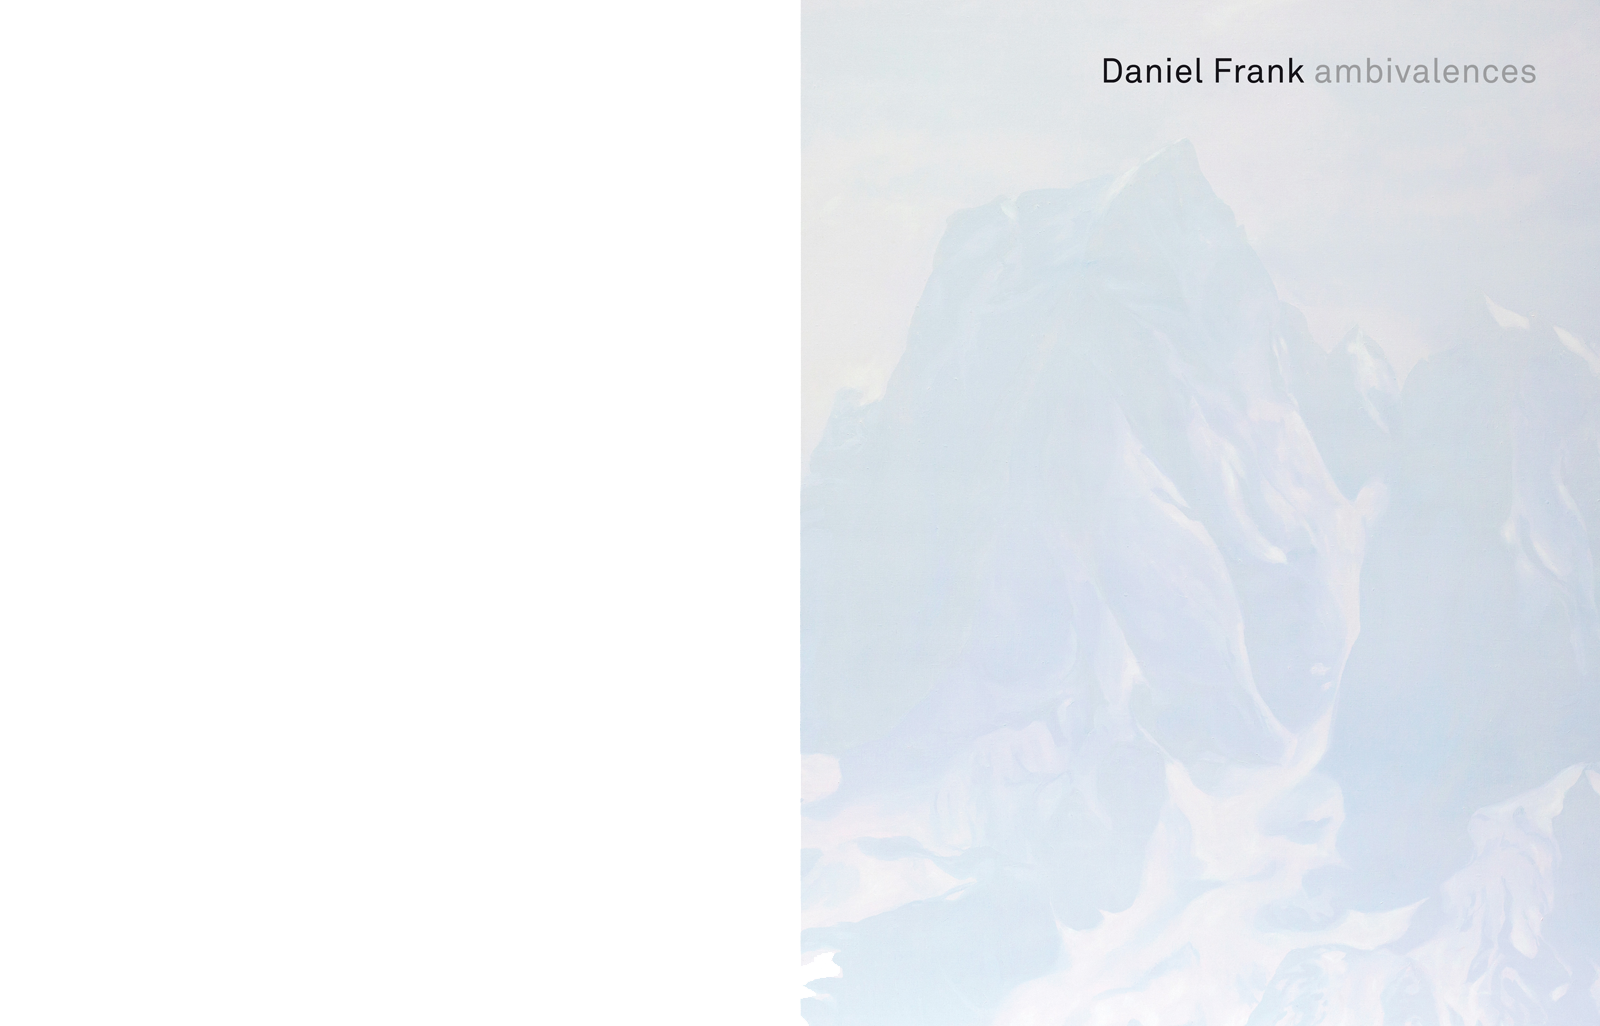 DANIEL FRANK - AMBIVALENCES